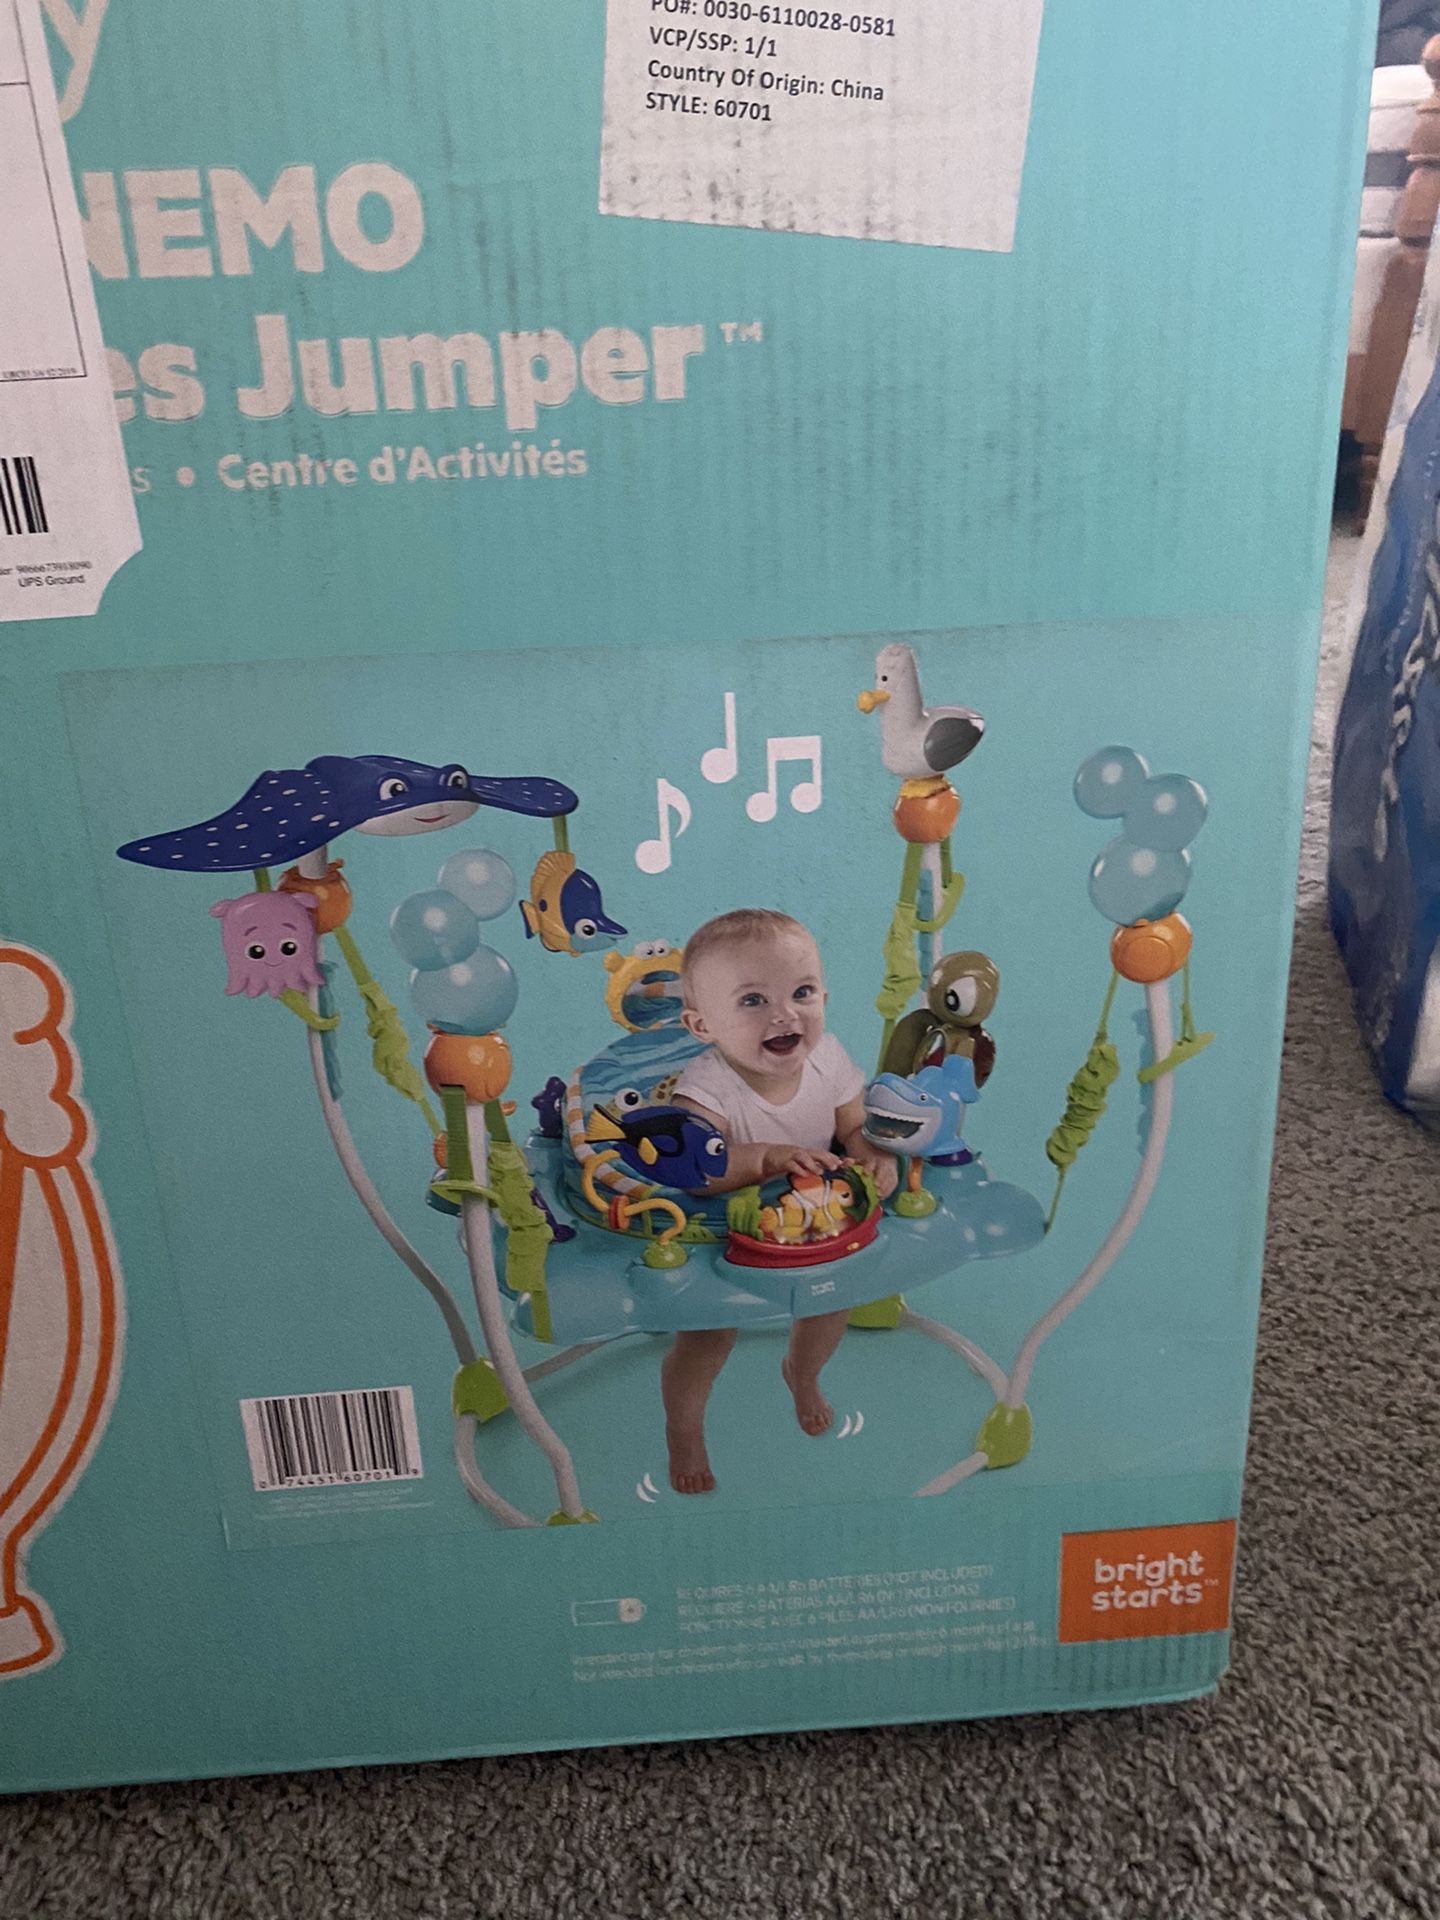 Baby Jumper with activities